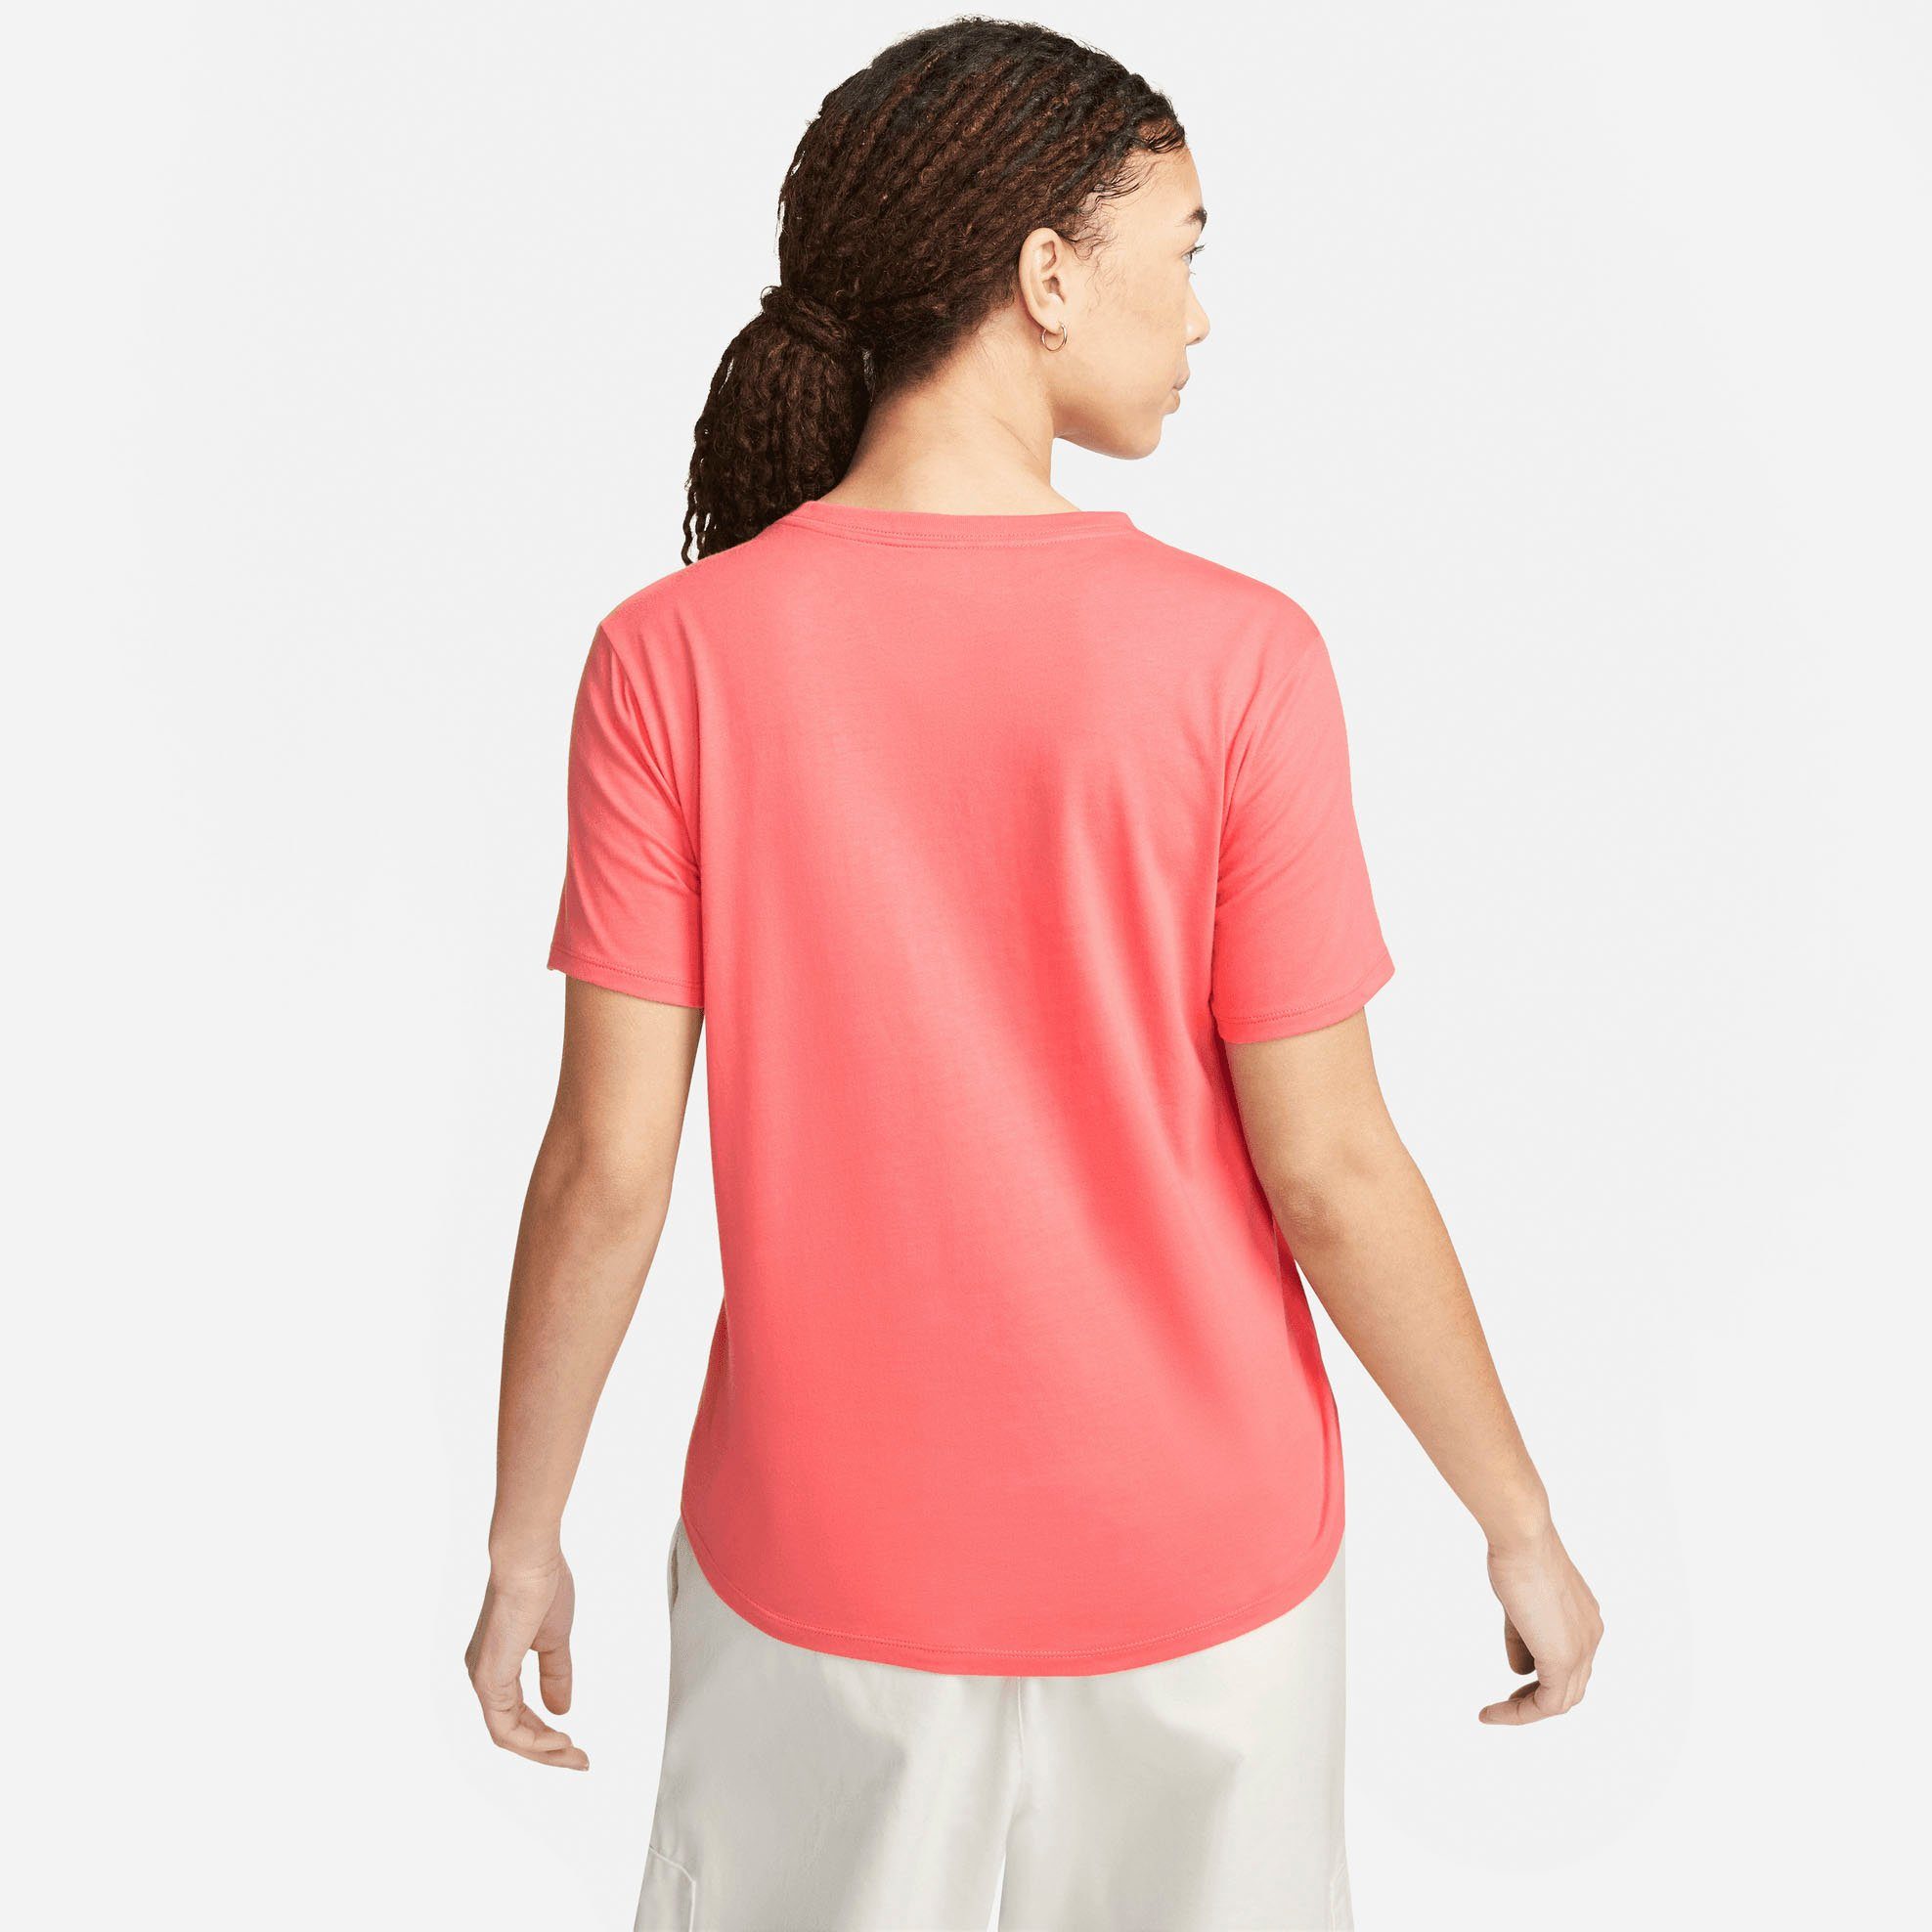 LOGO ESSENTIALS Sportswear T-Shirt orange T-SHIRT WOMEN'S Nike